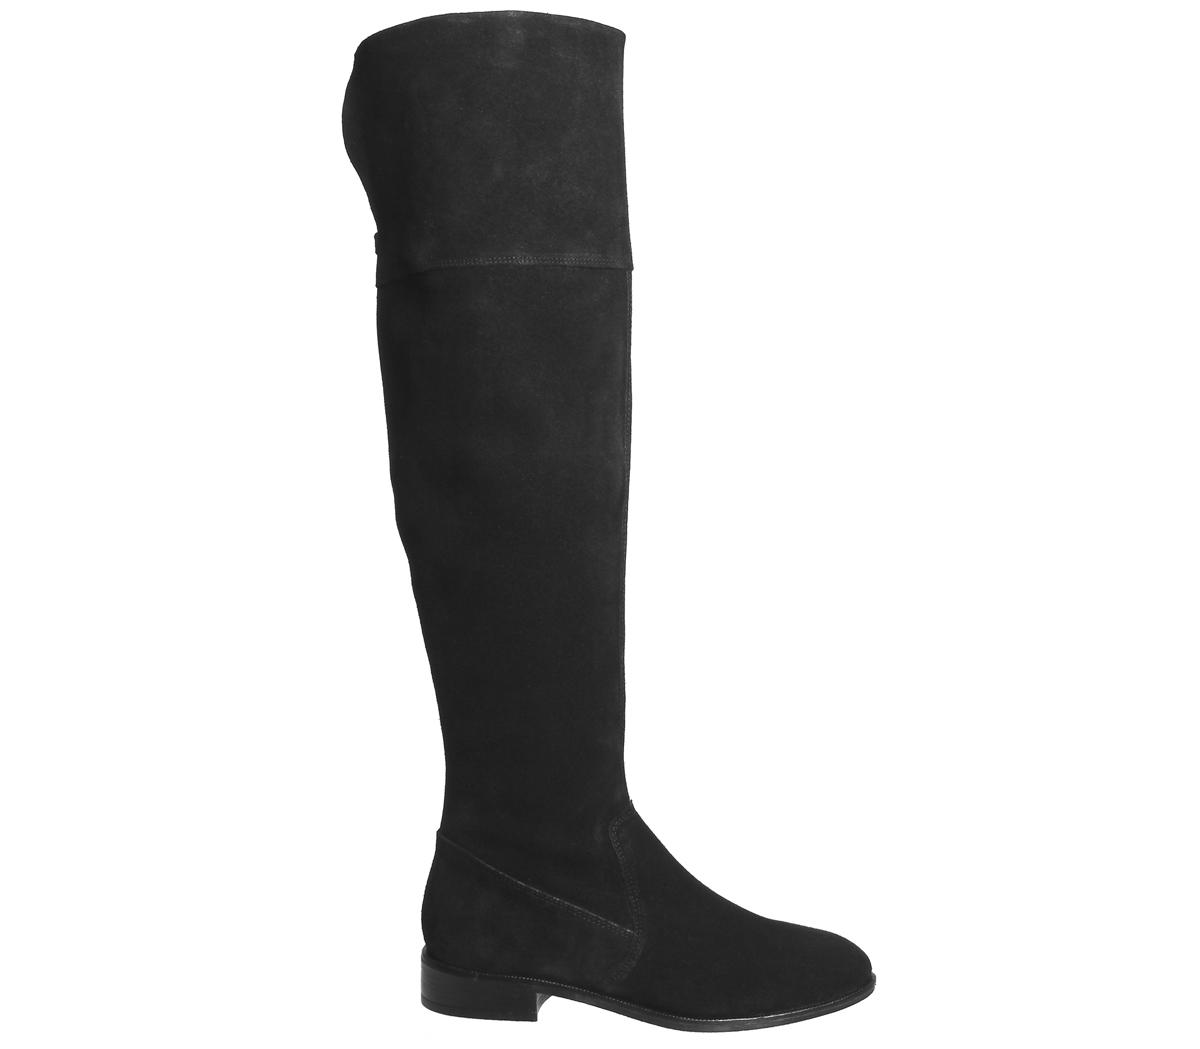 OFFICE Kooper Suede Casual Knee Boots Black Suede - Knee High Boots